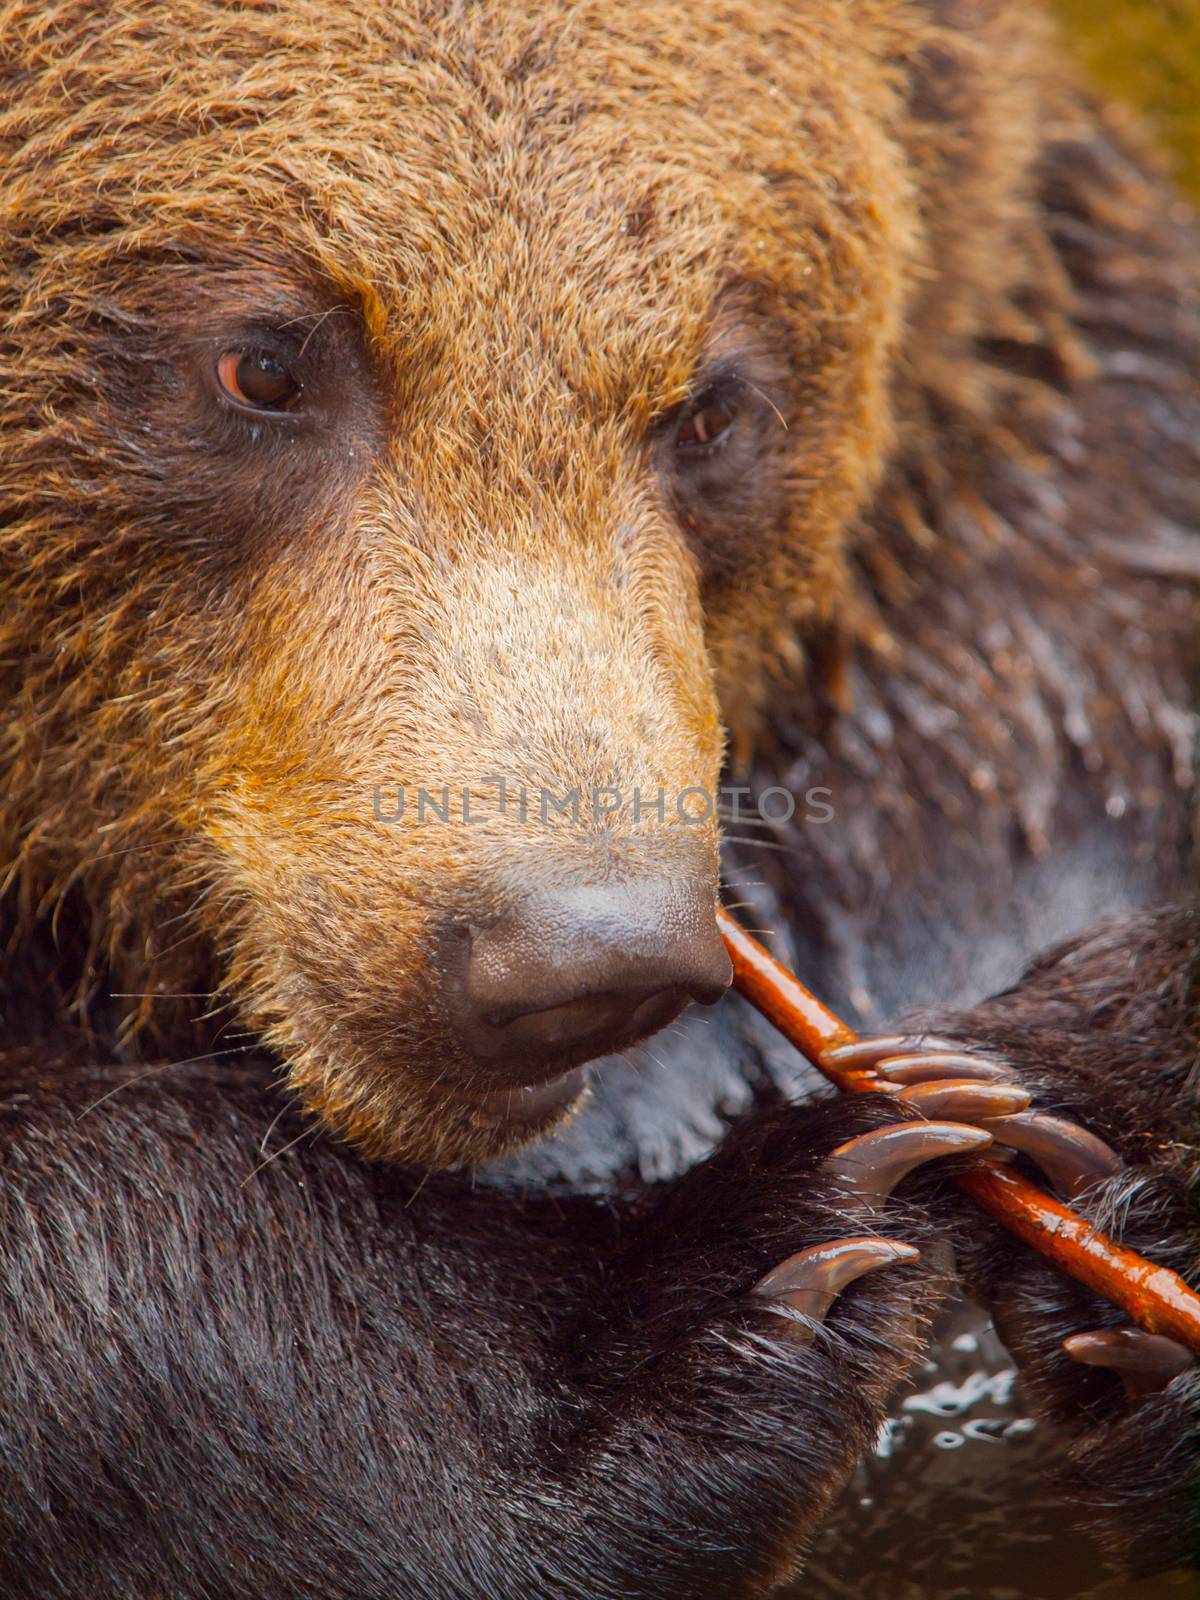 Cute bear with stick using like a toothpick